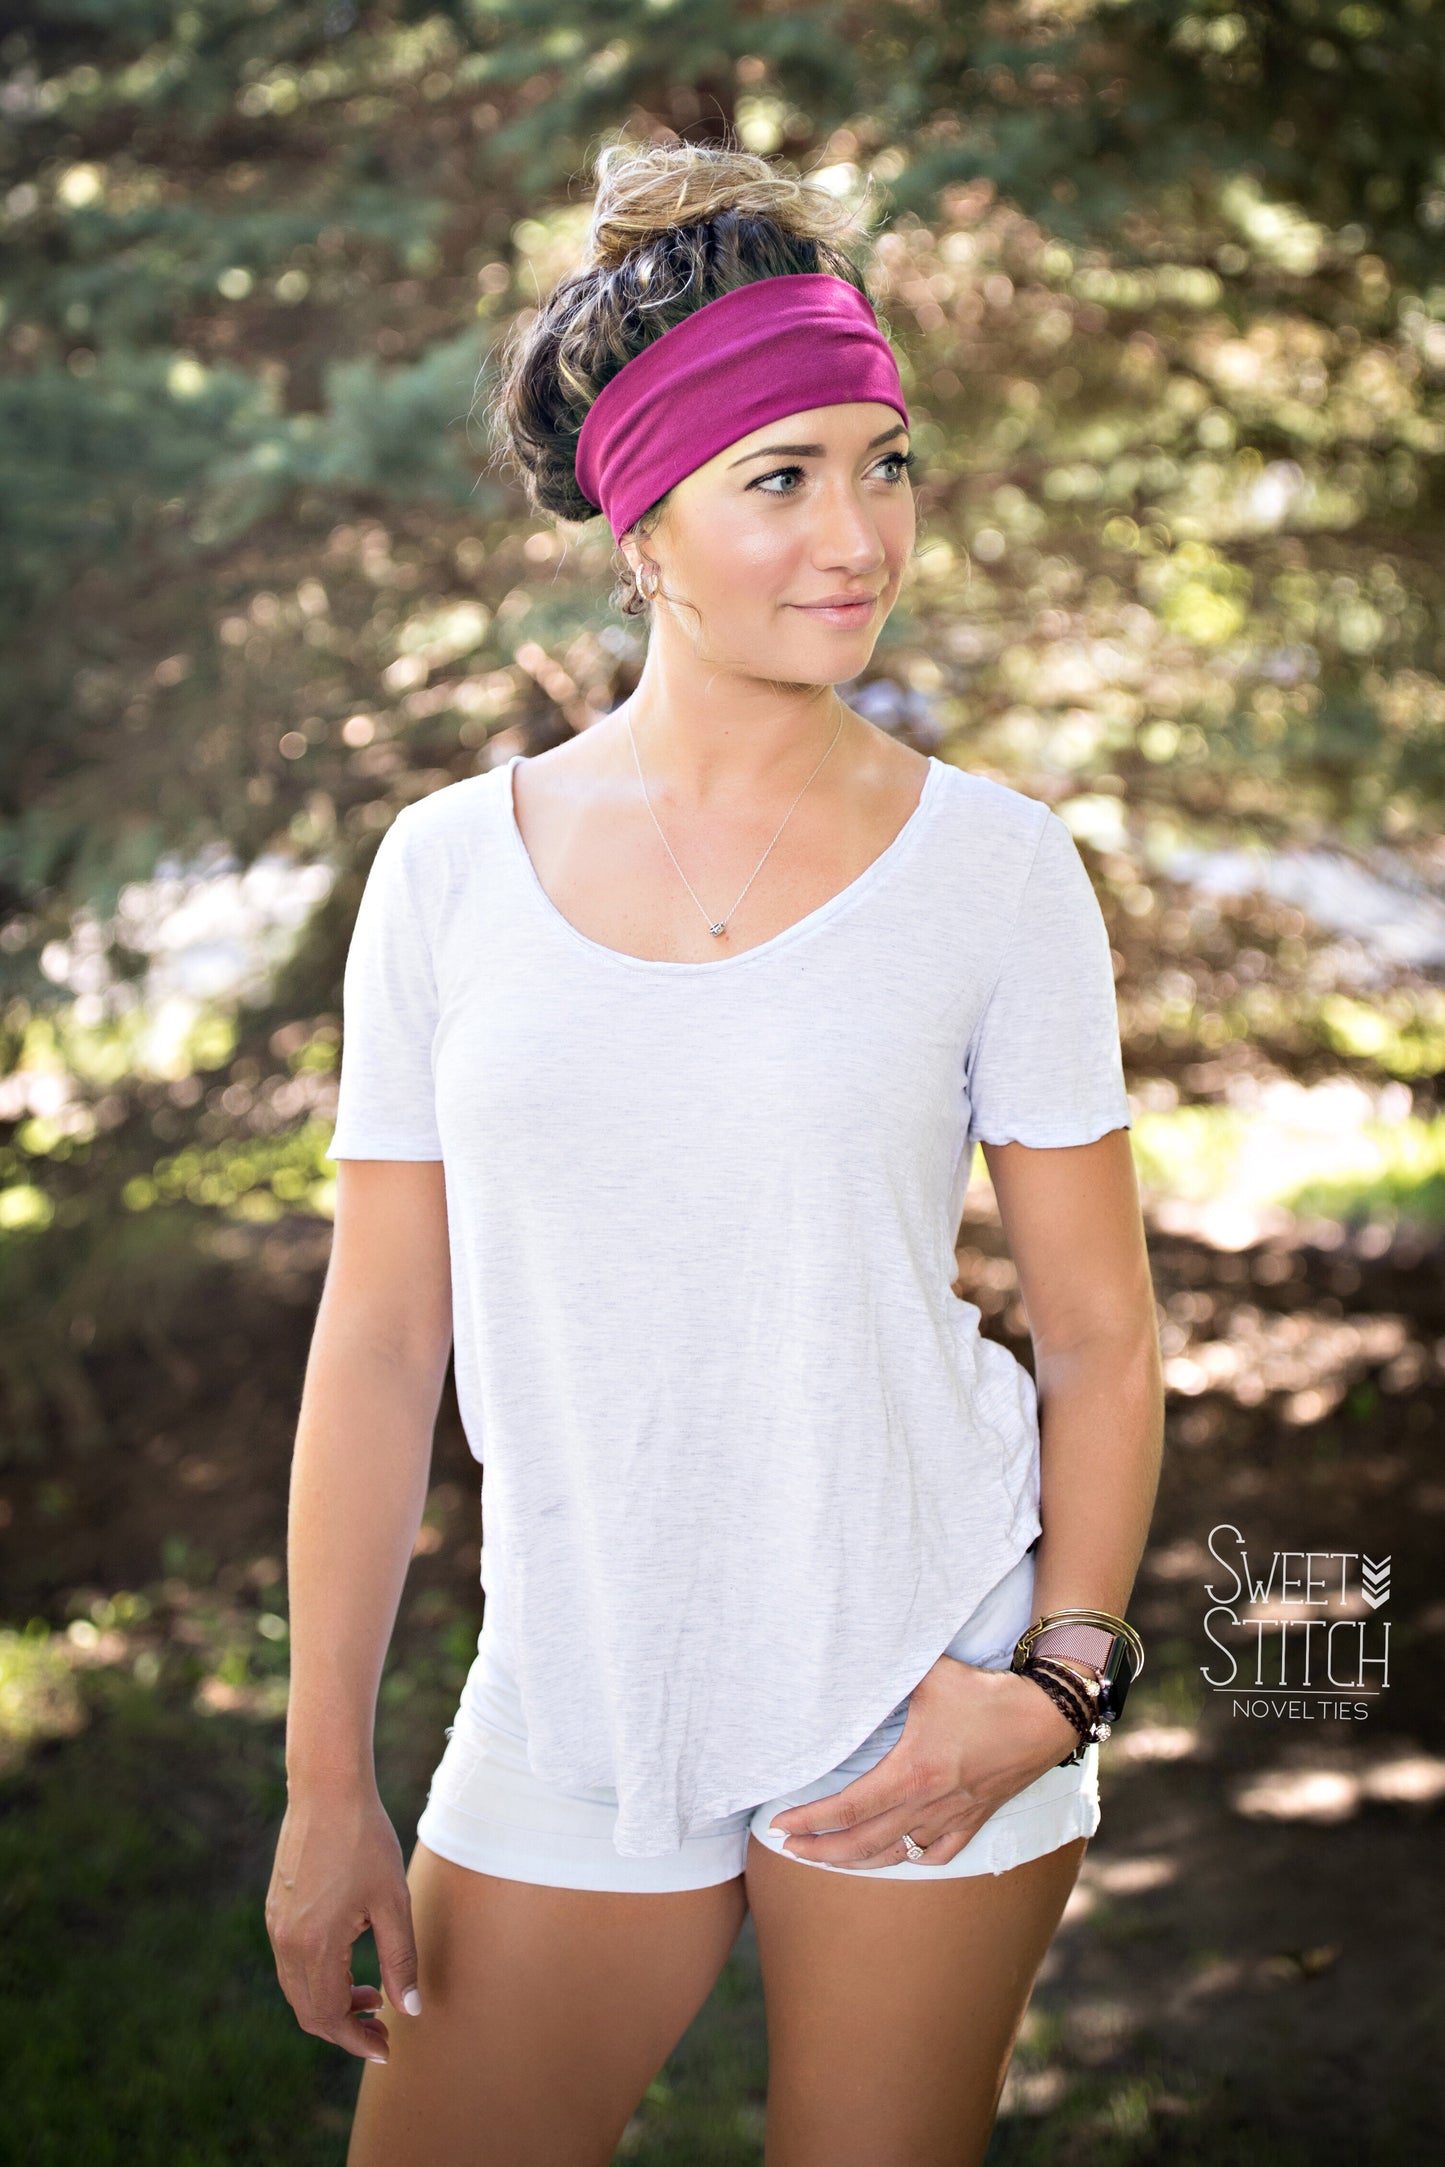 Kelly Green Headband-Turban Twist and Yoga Styles | Sweet Stitch Novelties - Sweet Stitch Novelties